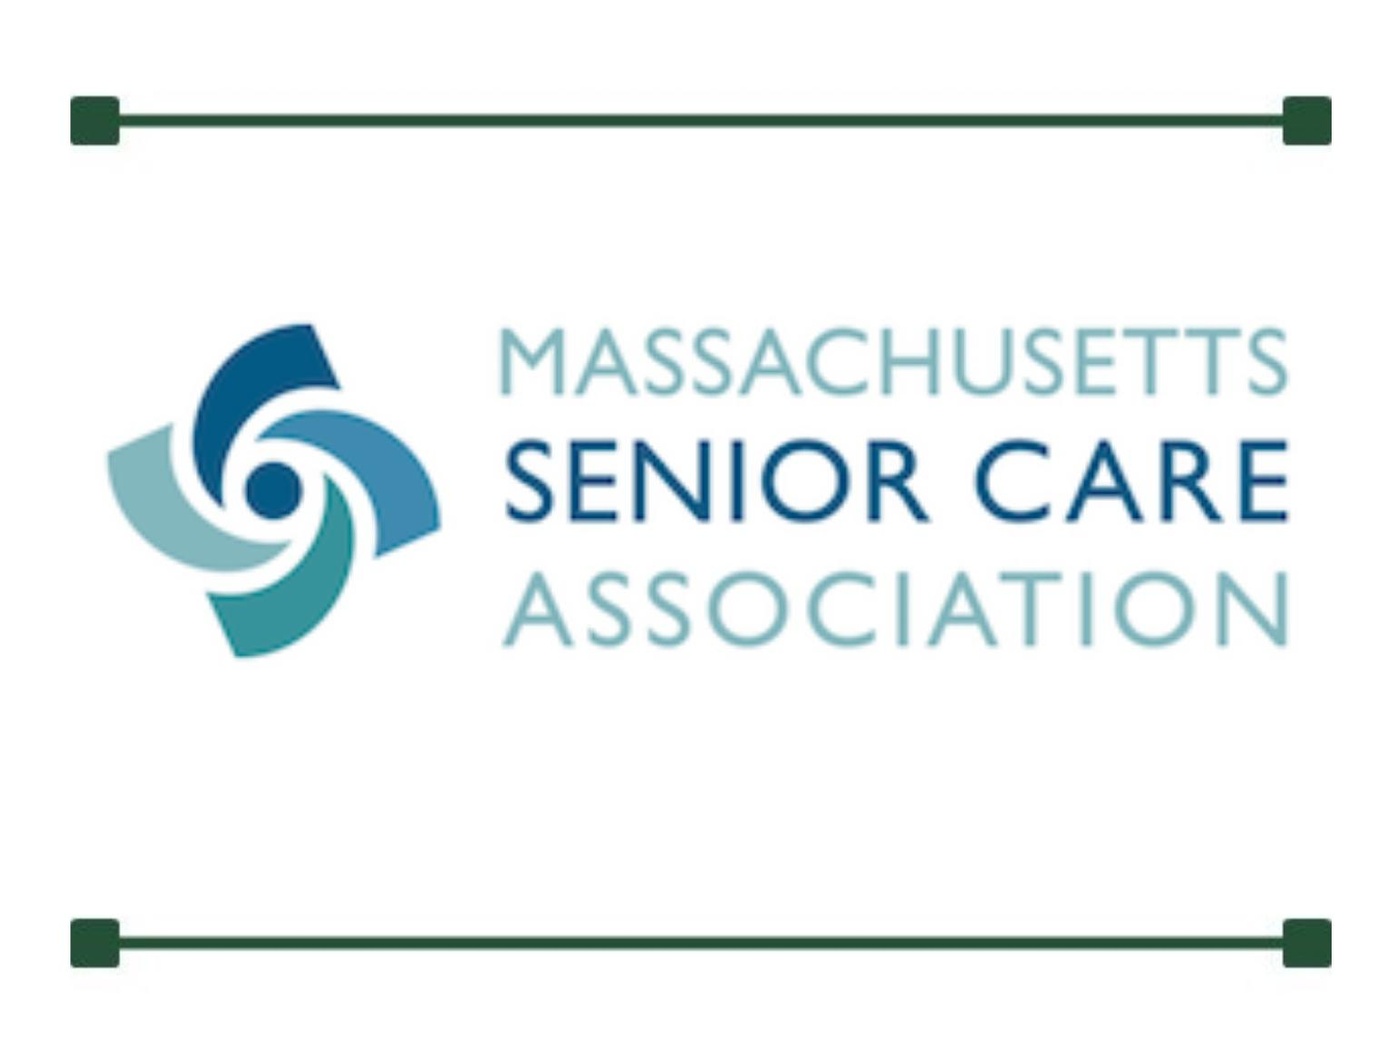 Massachusetts Senior Care Association Annual Meeting & Trade Show